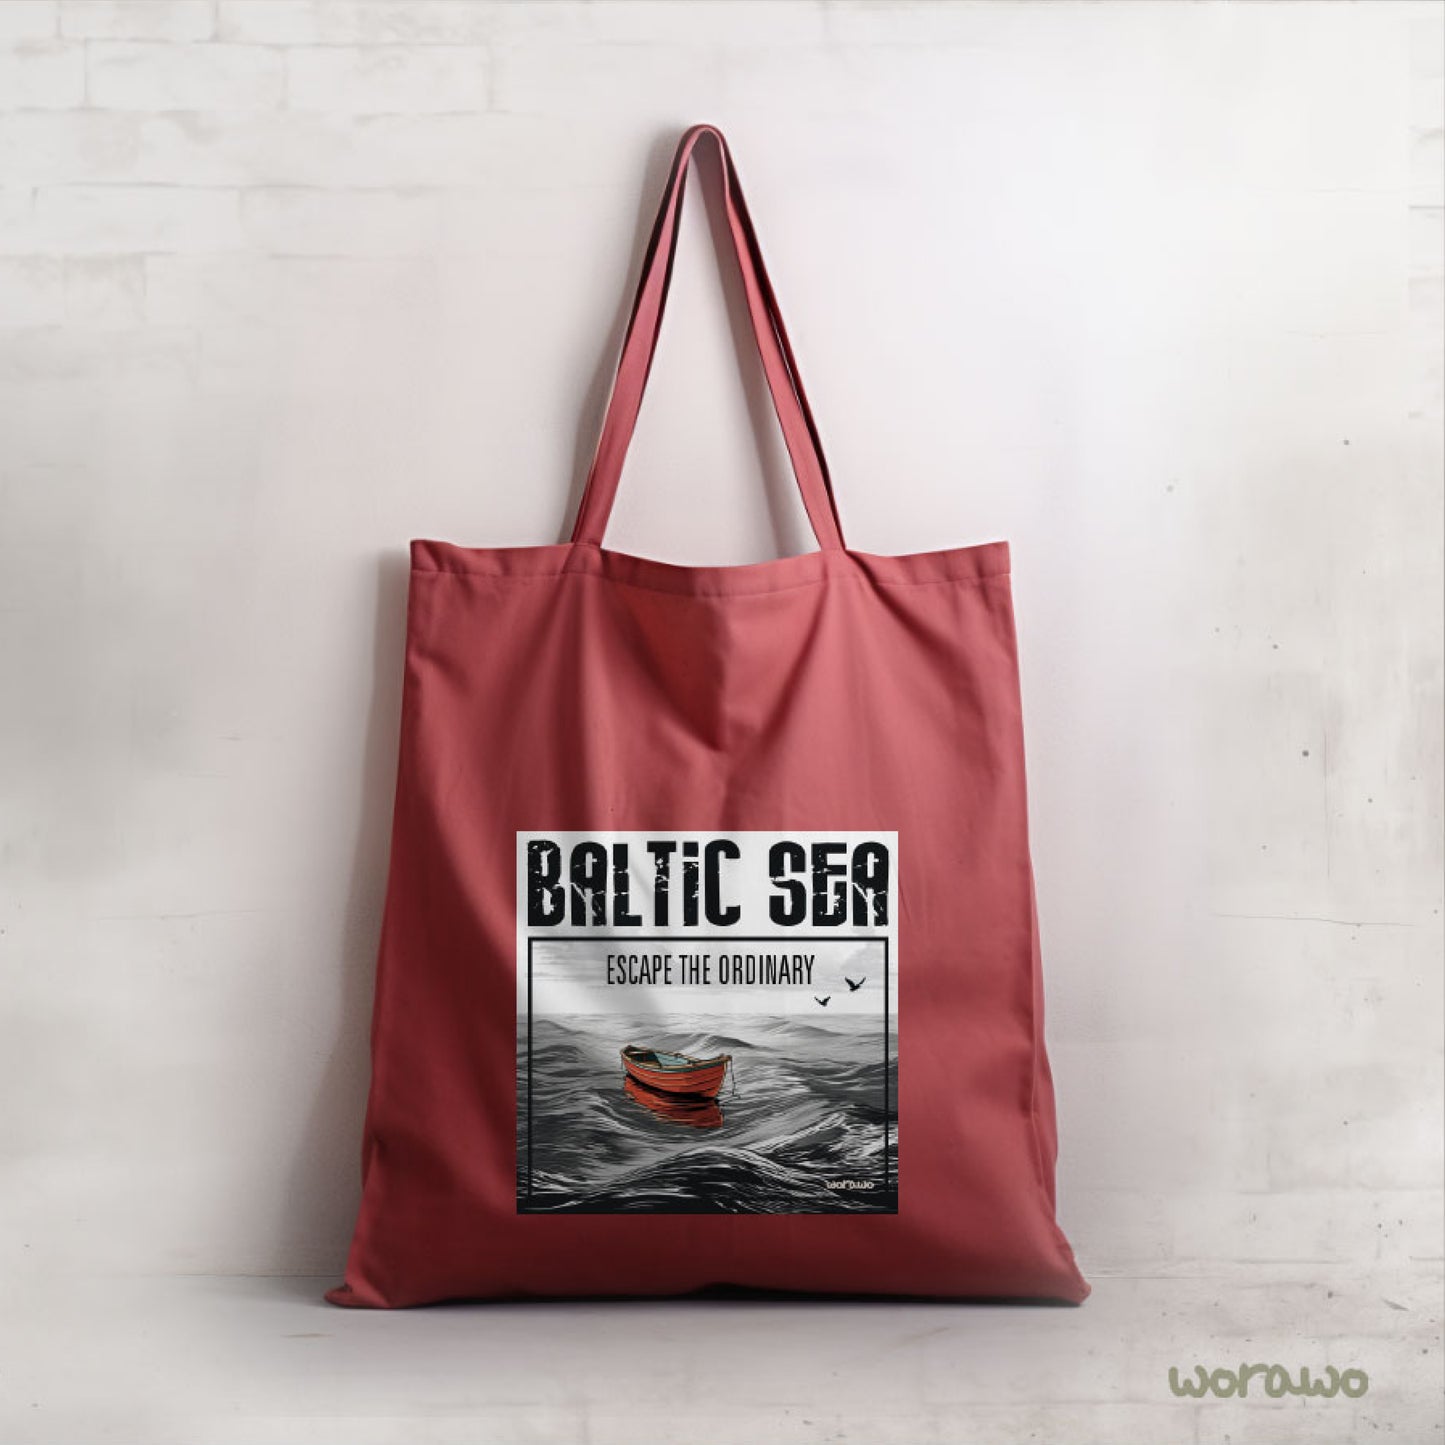 Bügelbild Baltic Sea (Escape the Ordinary)